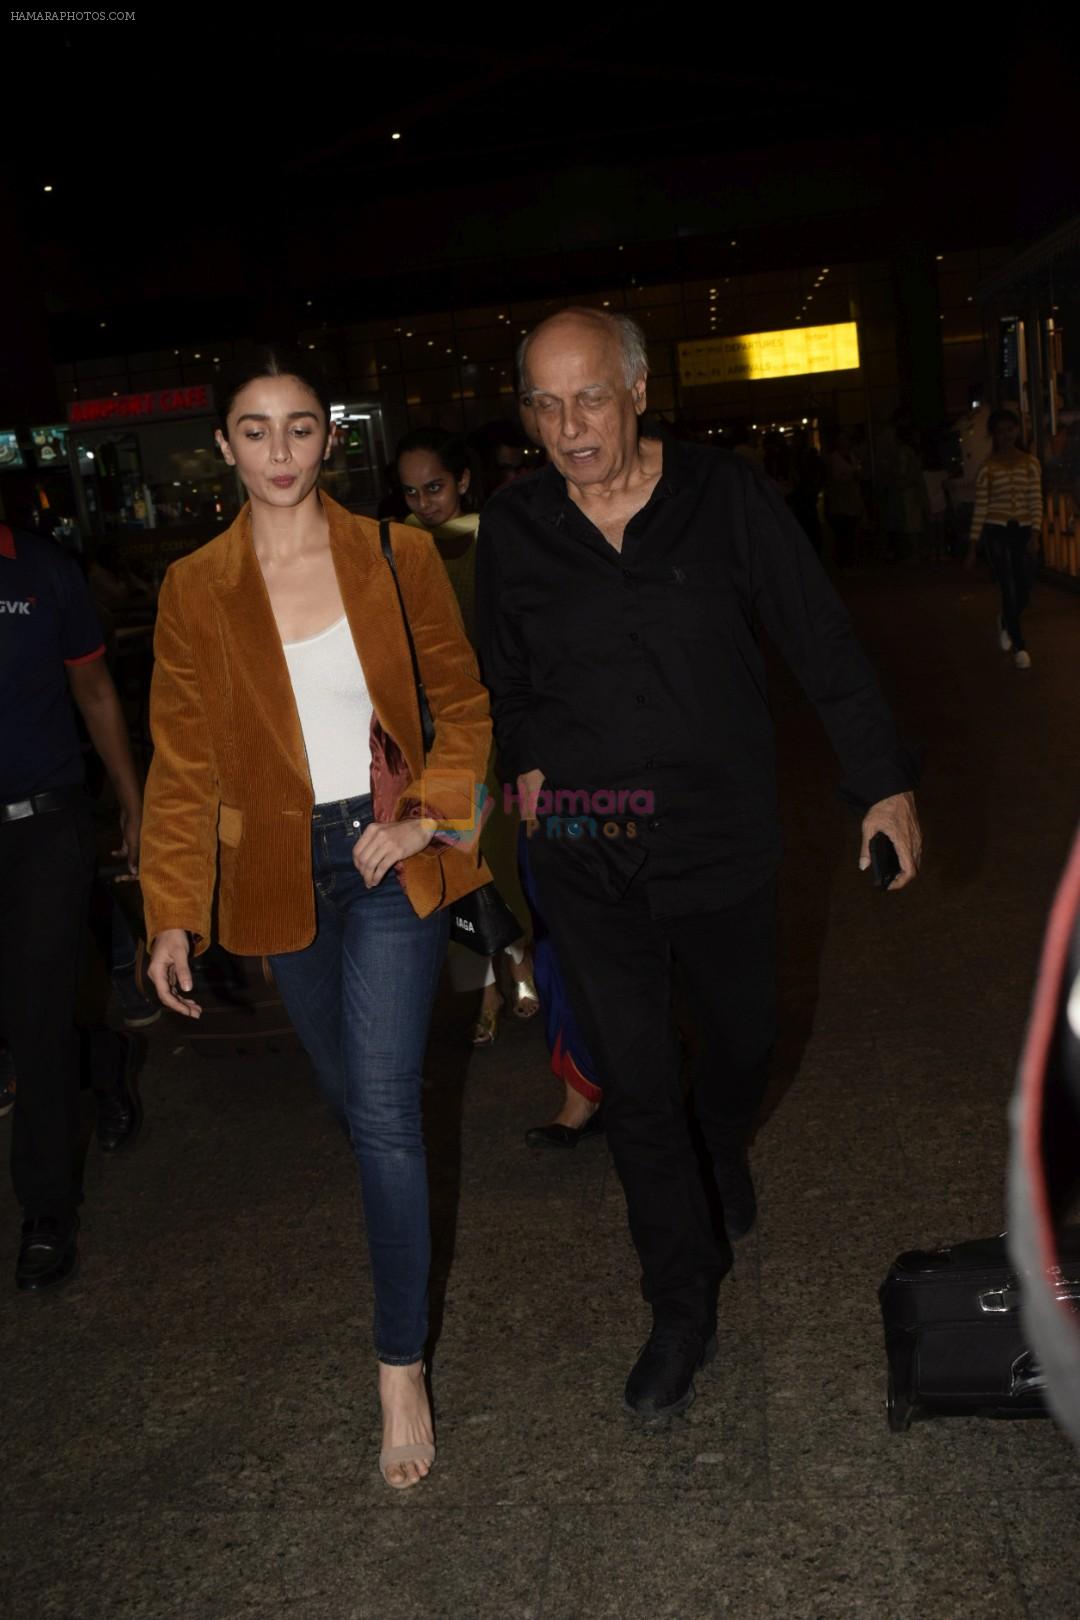 Alia Bhatt, Mahesh Bhatt spotted at airport on 11th Nov 2018